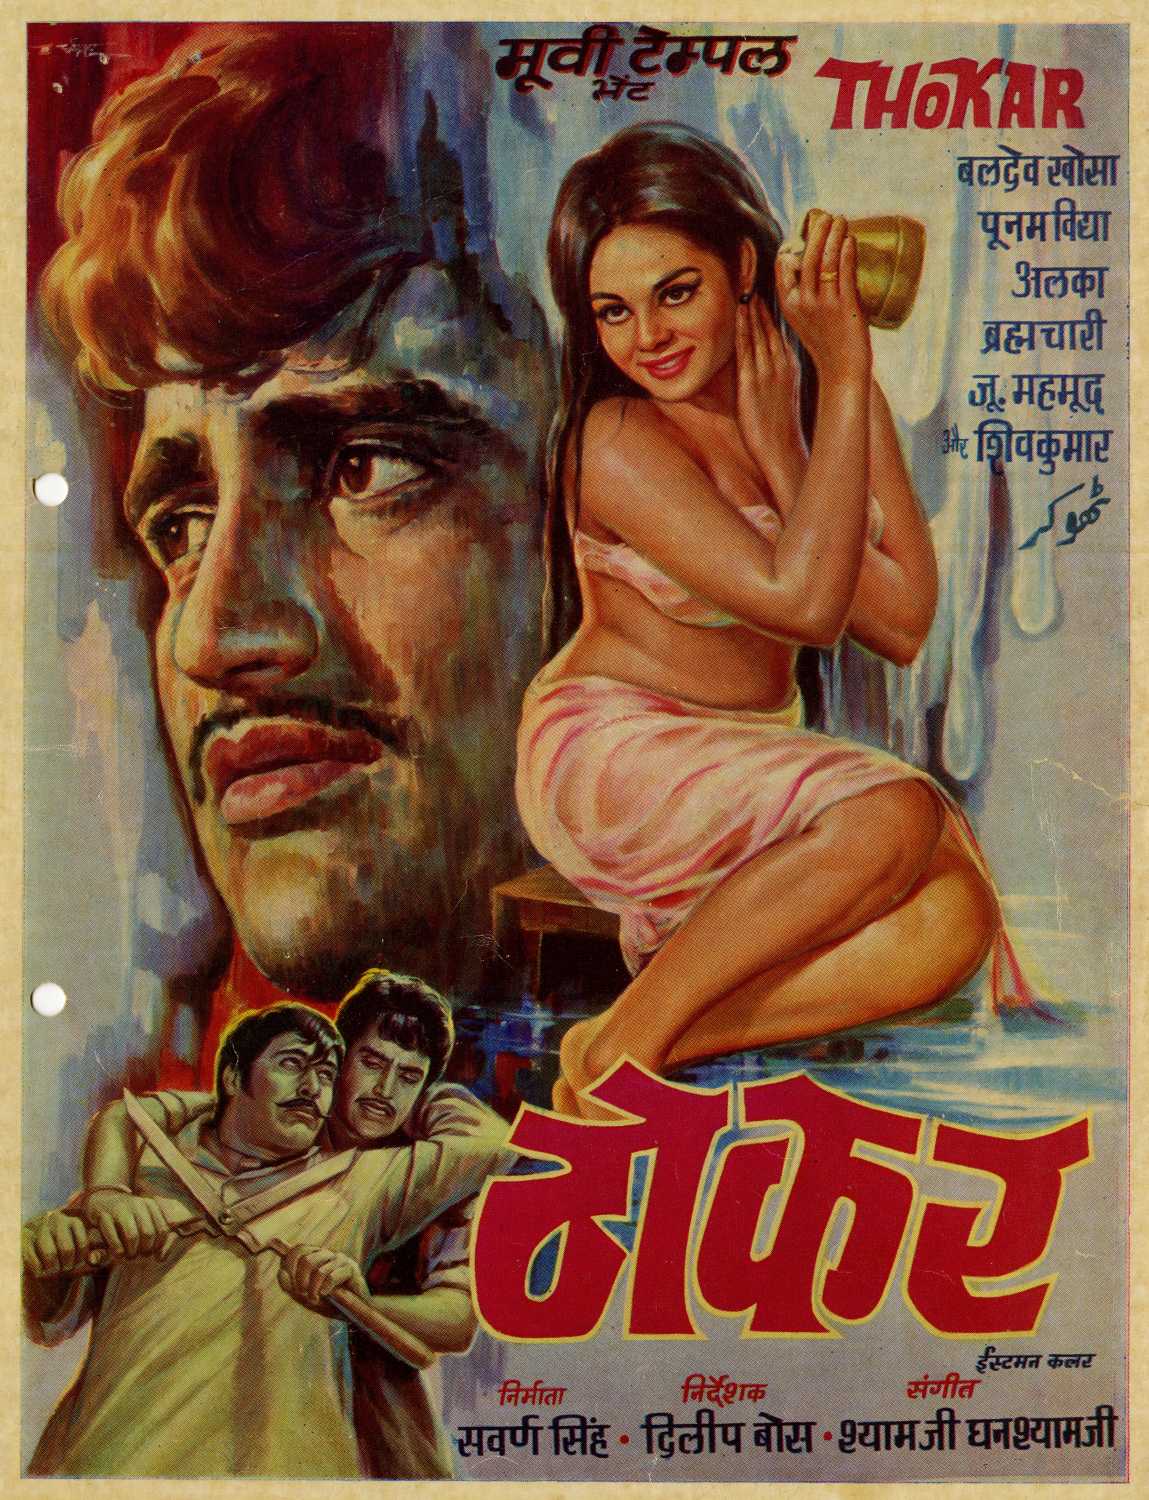 Thokar Poster